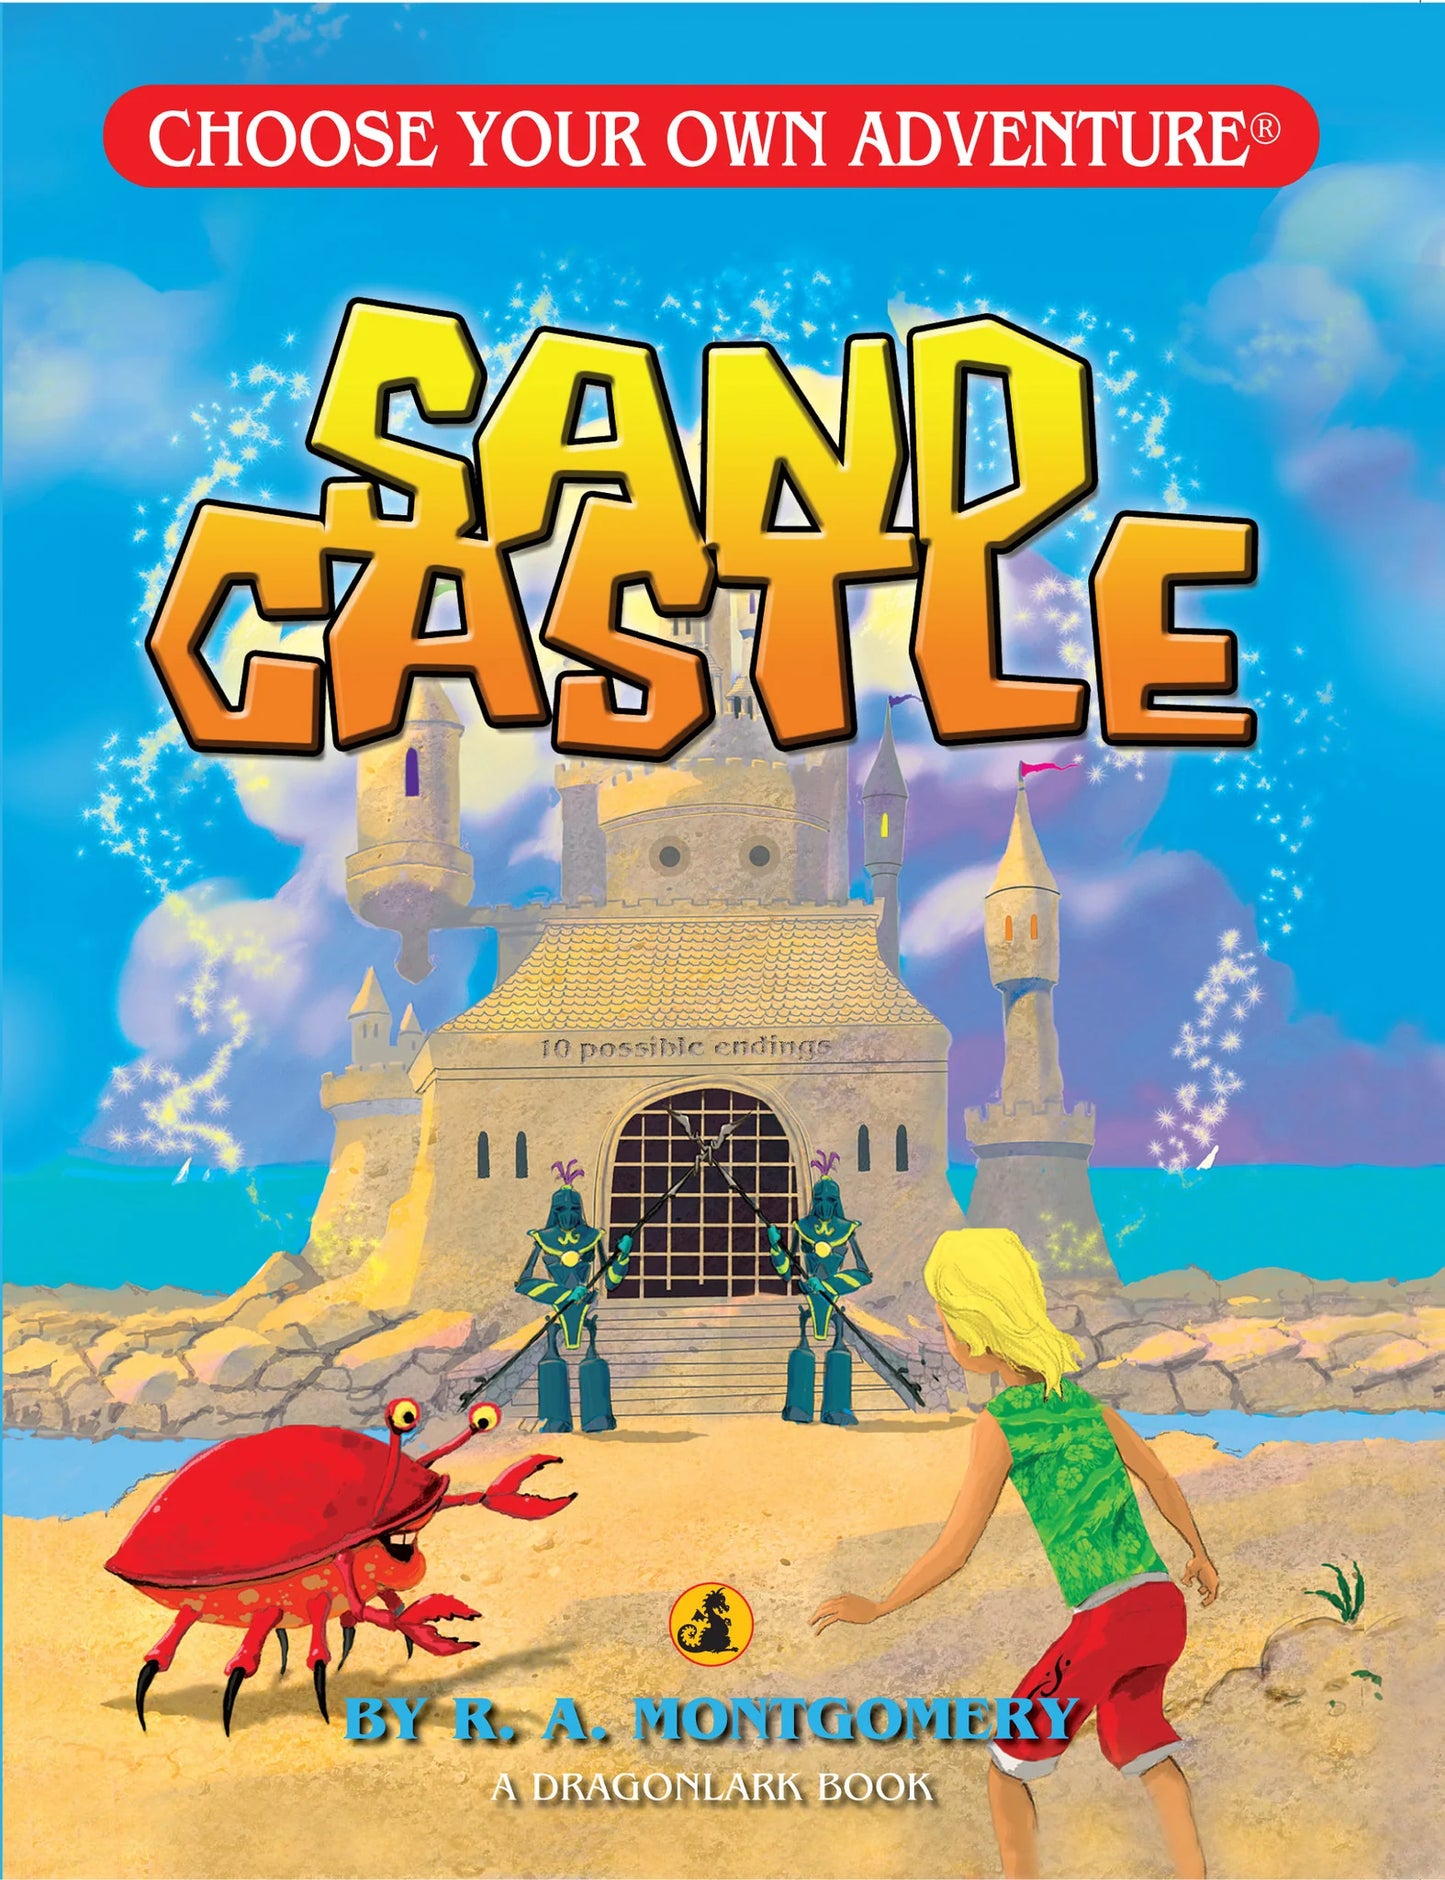 Book - Choose Your Own Adventure: Sand Castle